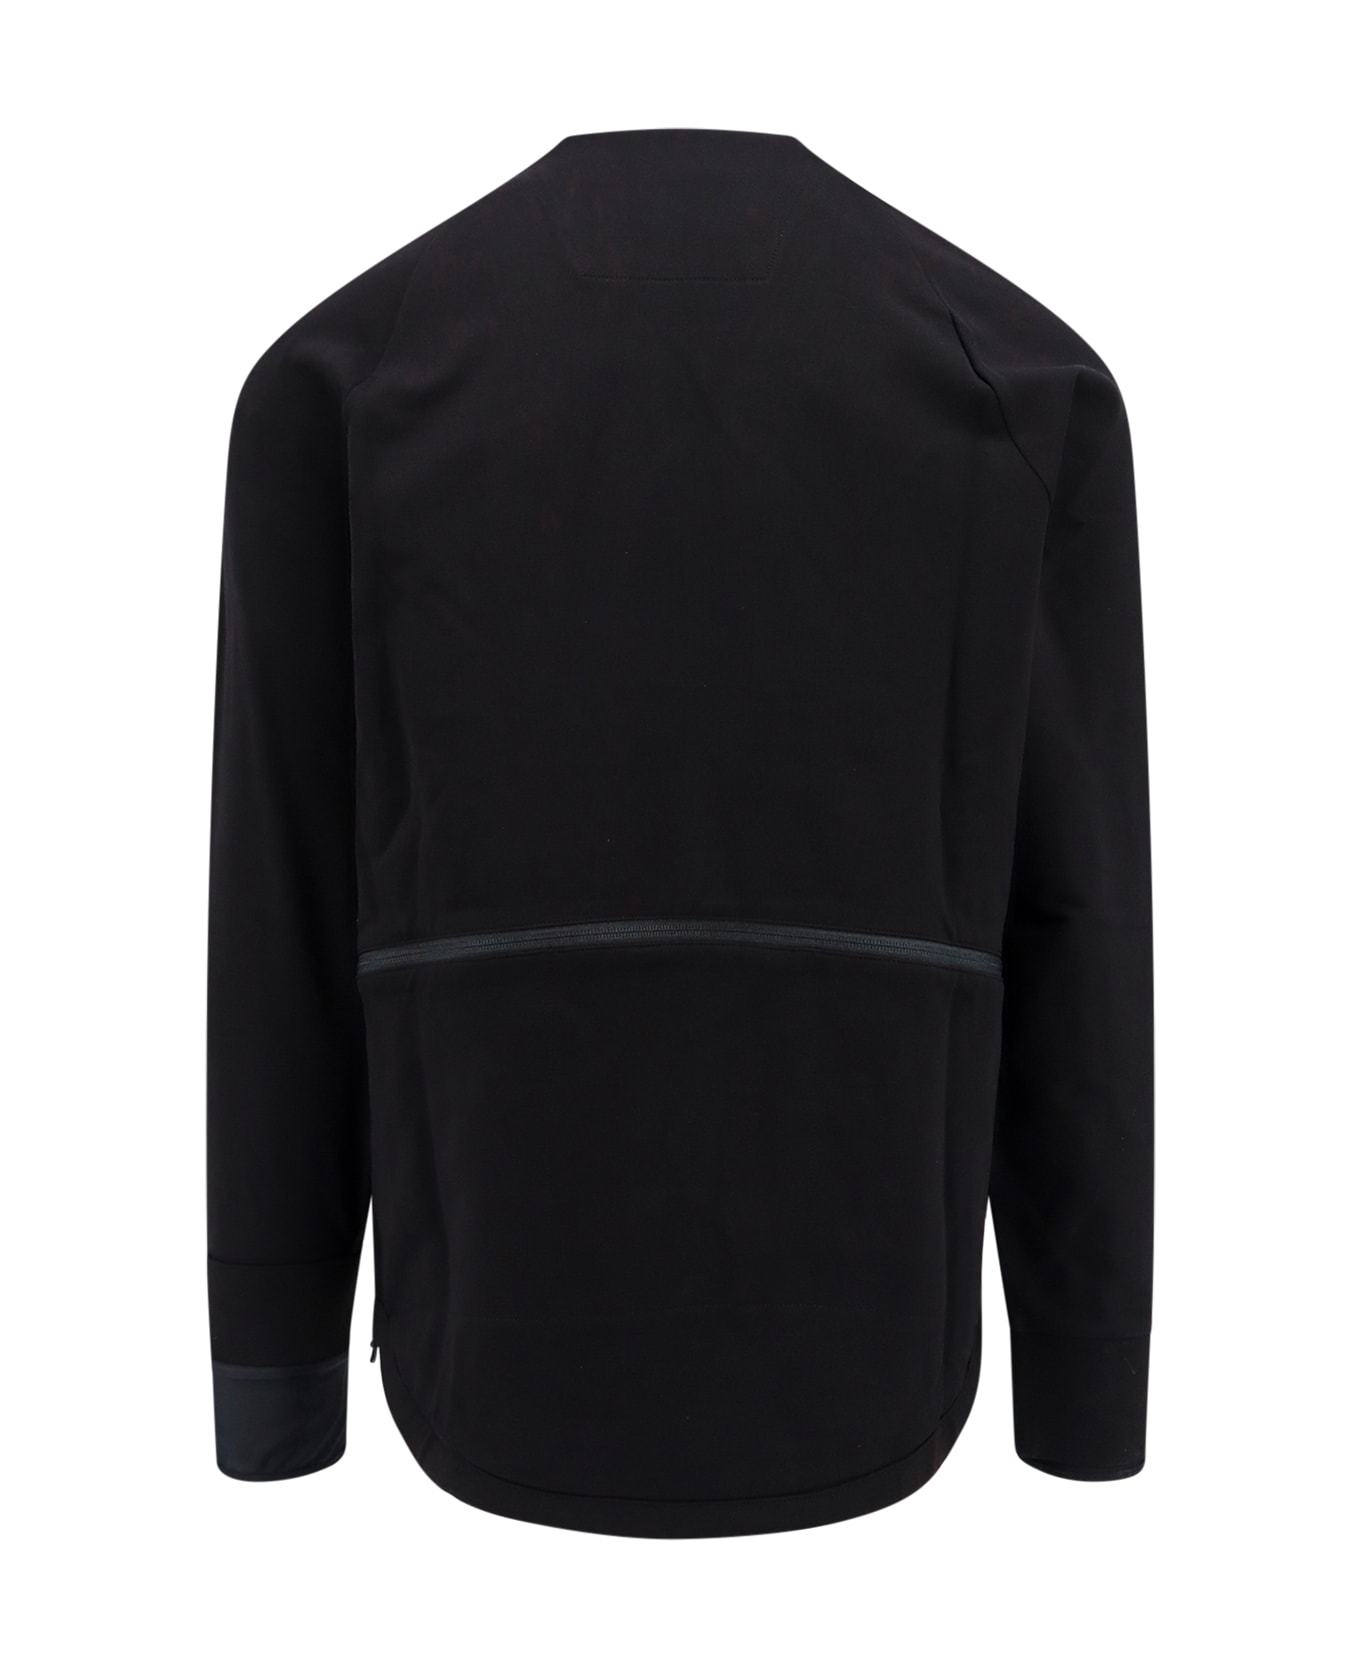 C.P. Company Sweatshirt - Black